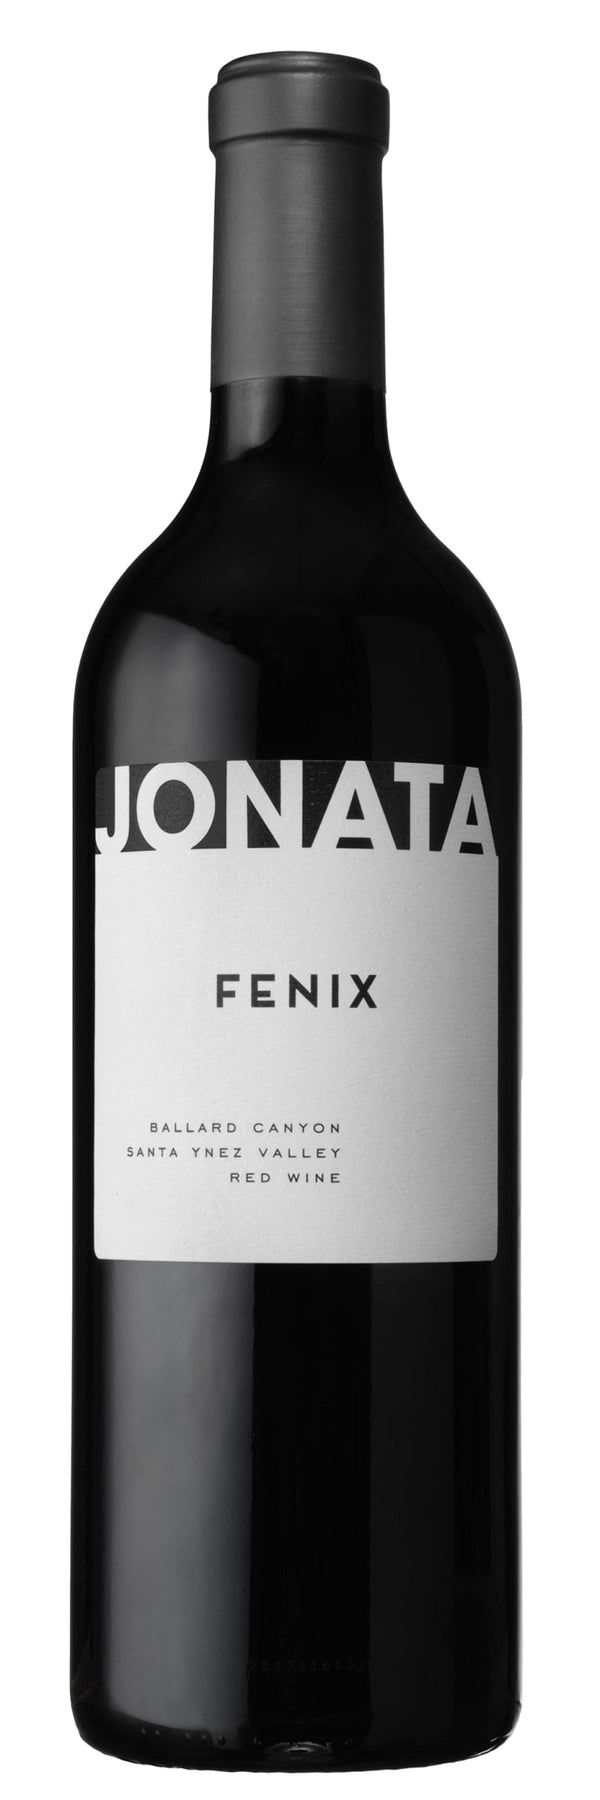 Jonata Fenix Merlot 2017 750ml